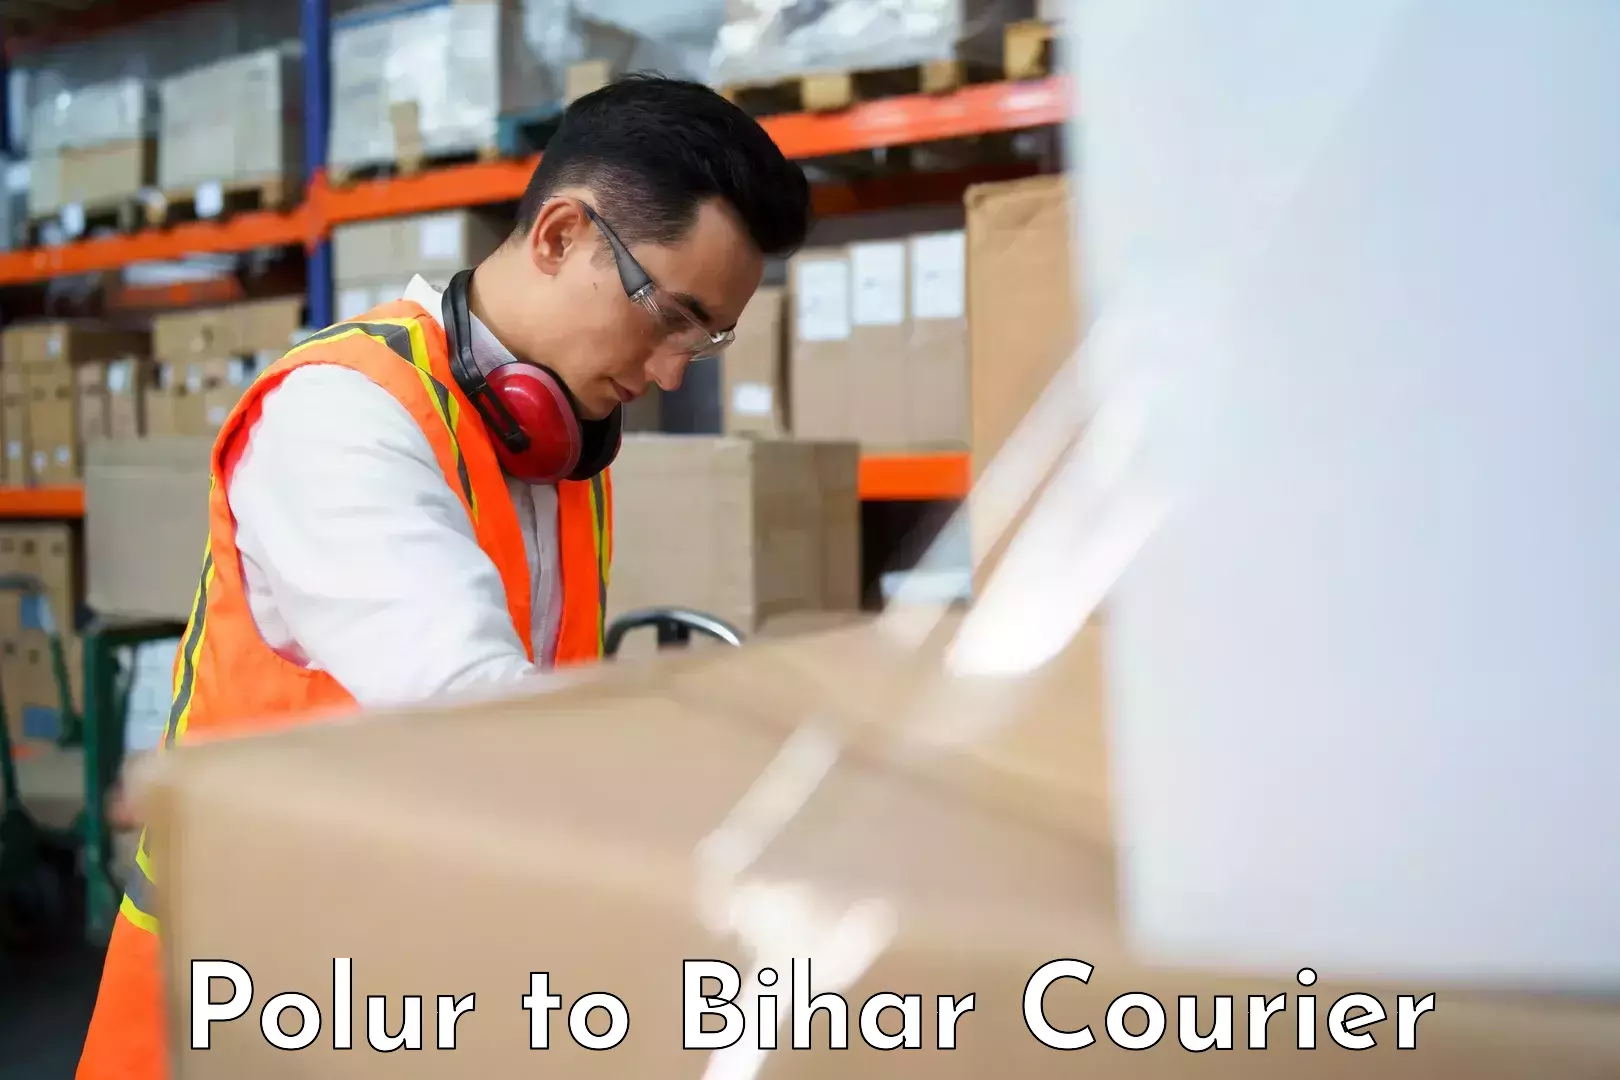 Quality moving company Polur to Bihar